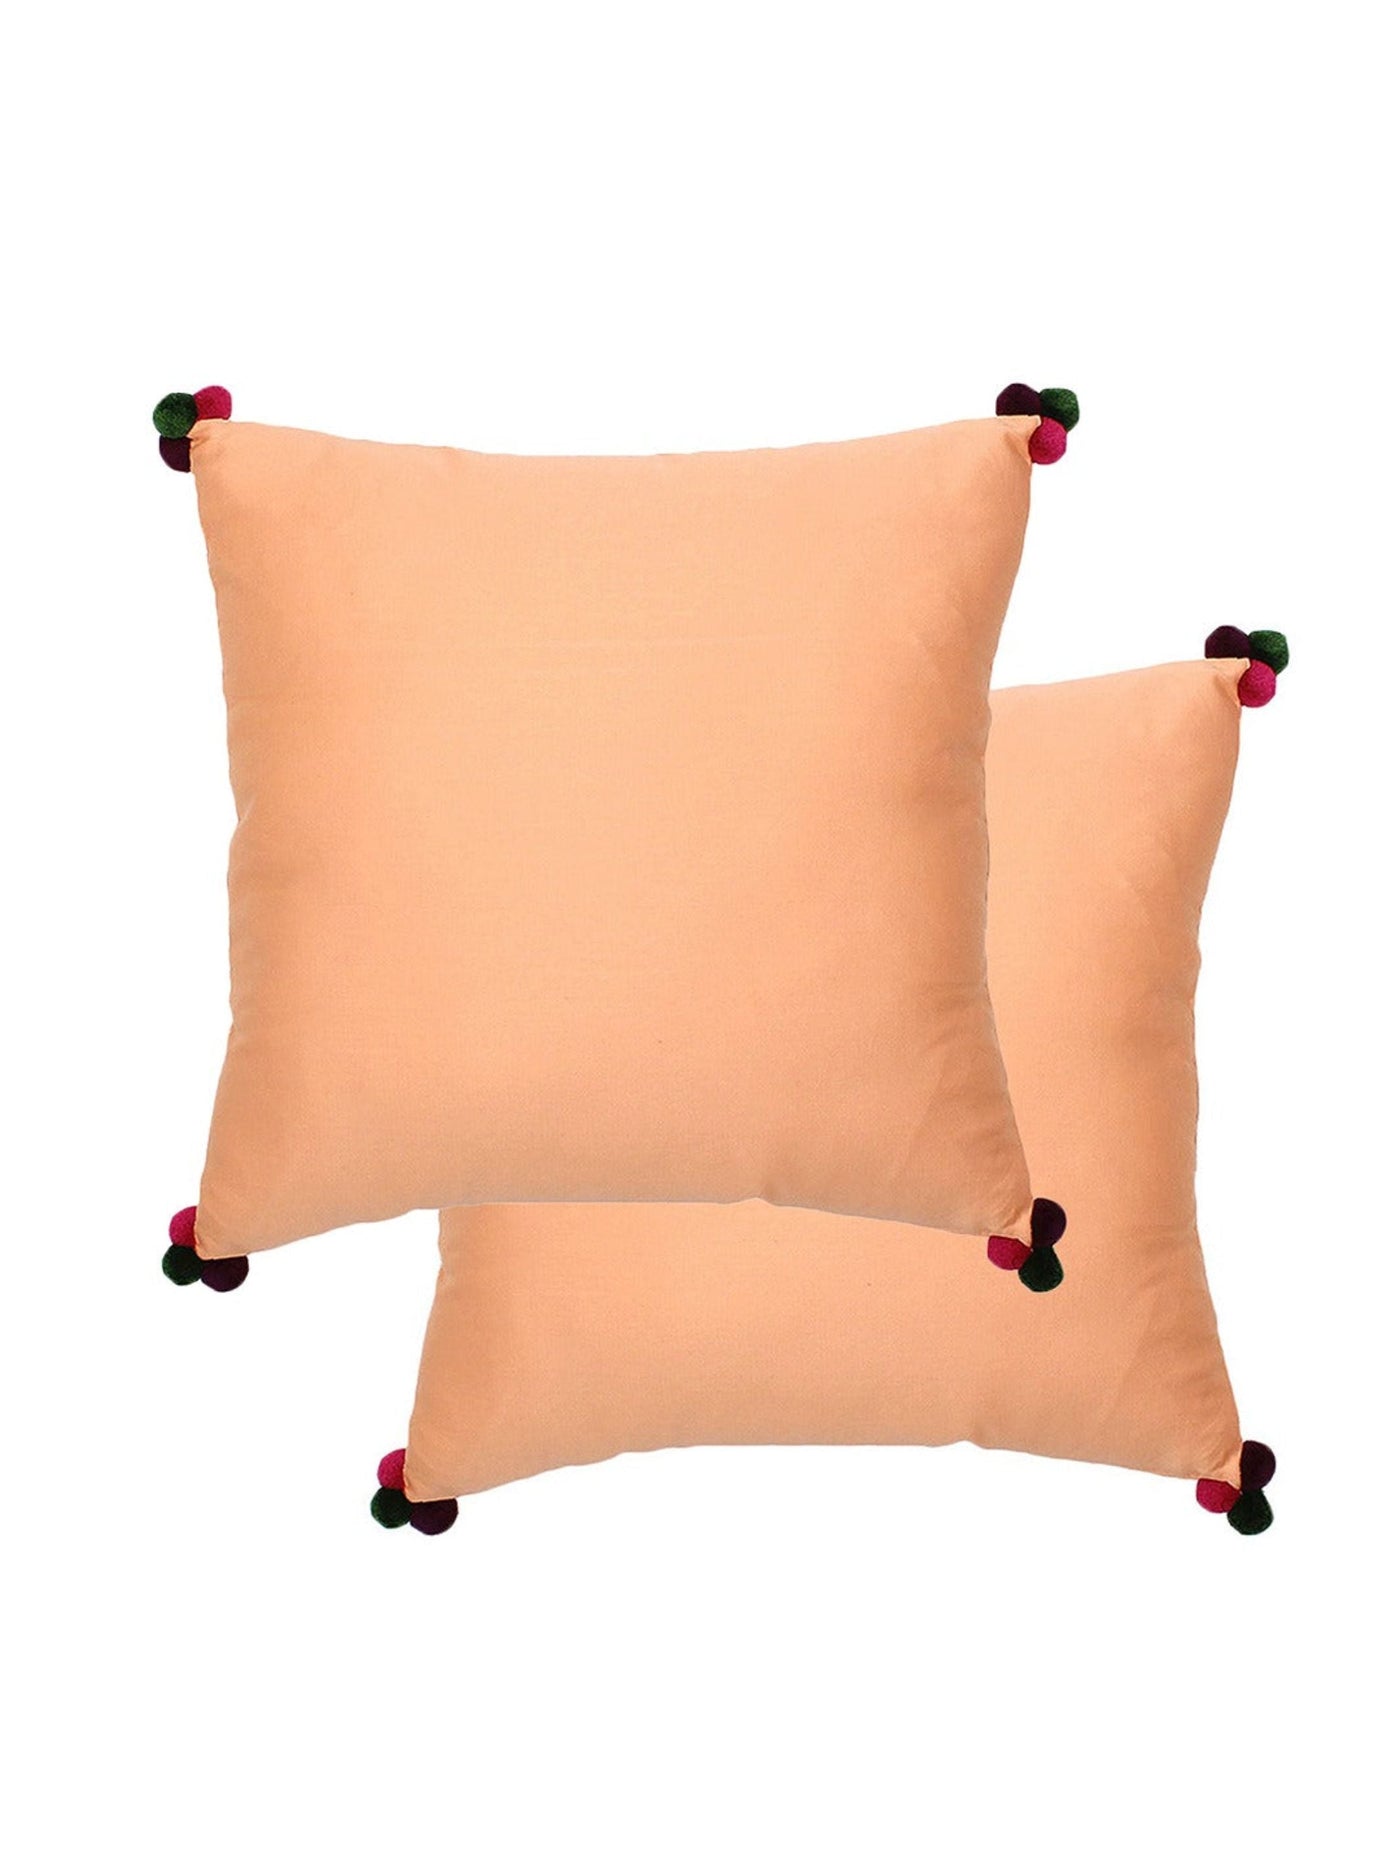 Cushion Cover - Coral Orange Cotton Satin 2 s-Orange-8903773001057